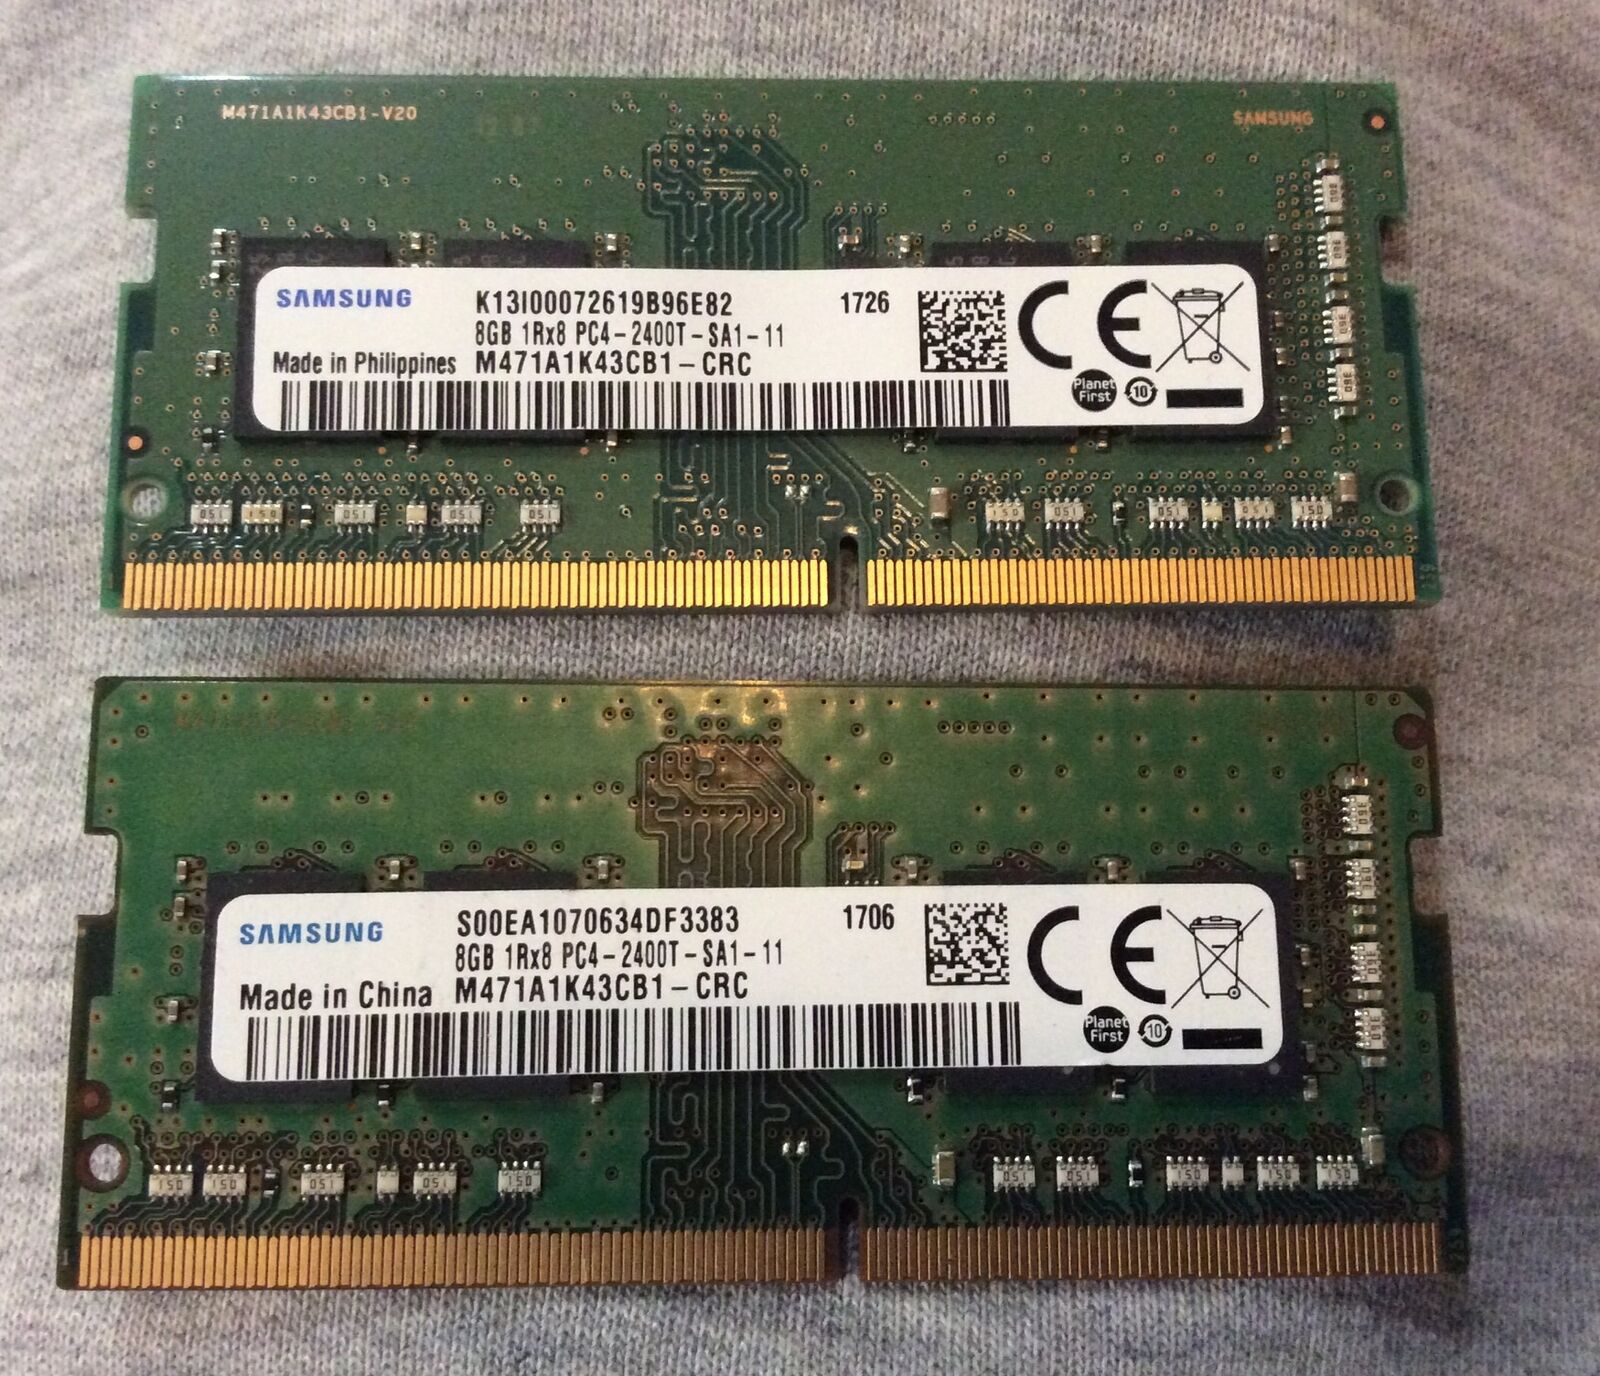 Samsung 16GB 2X 8GB 1Rx8 PC4-2400T-SA1-11 Laptop Memory Module M471A1K43CB1-CRC